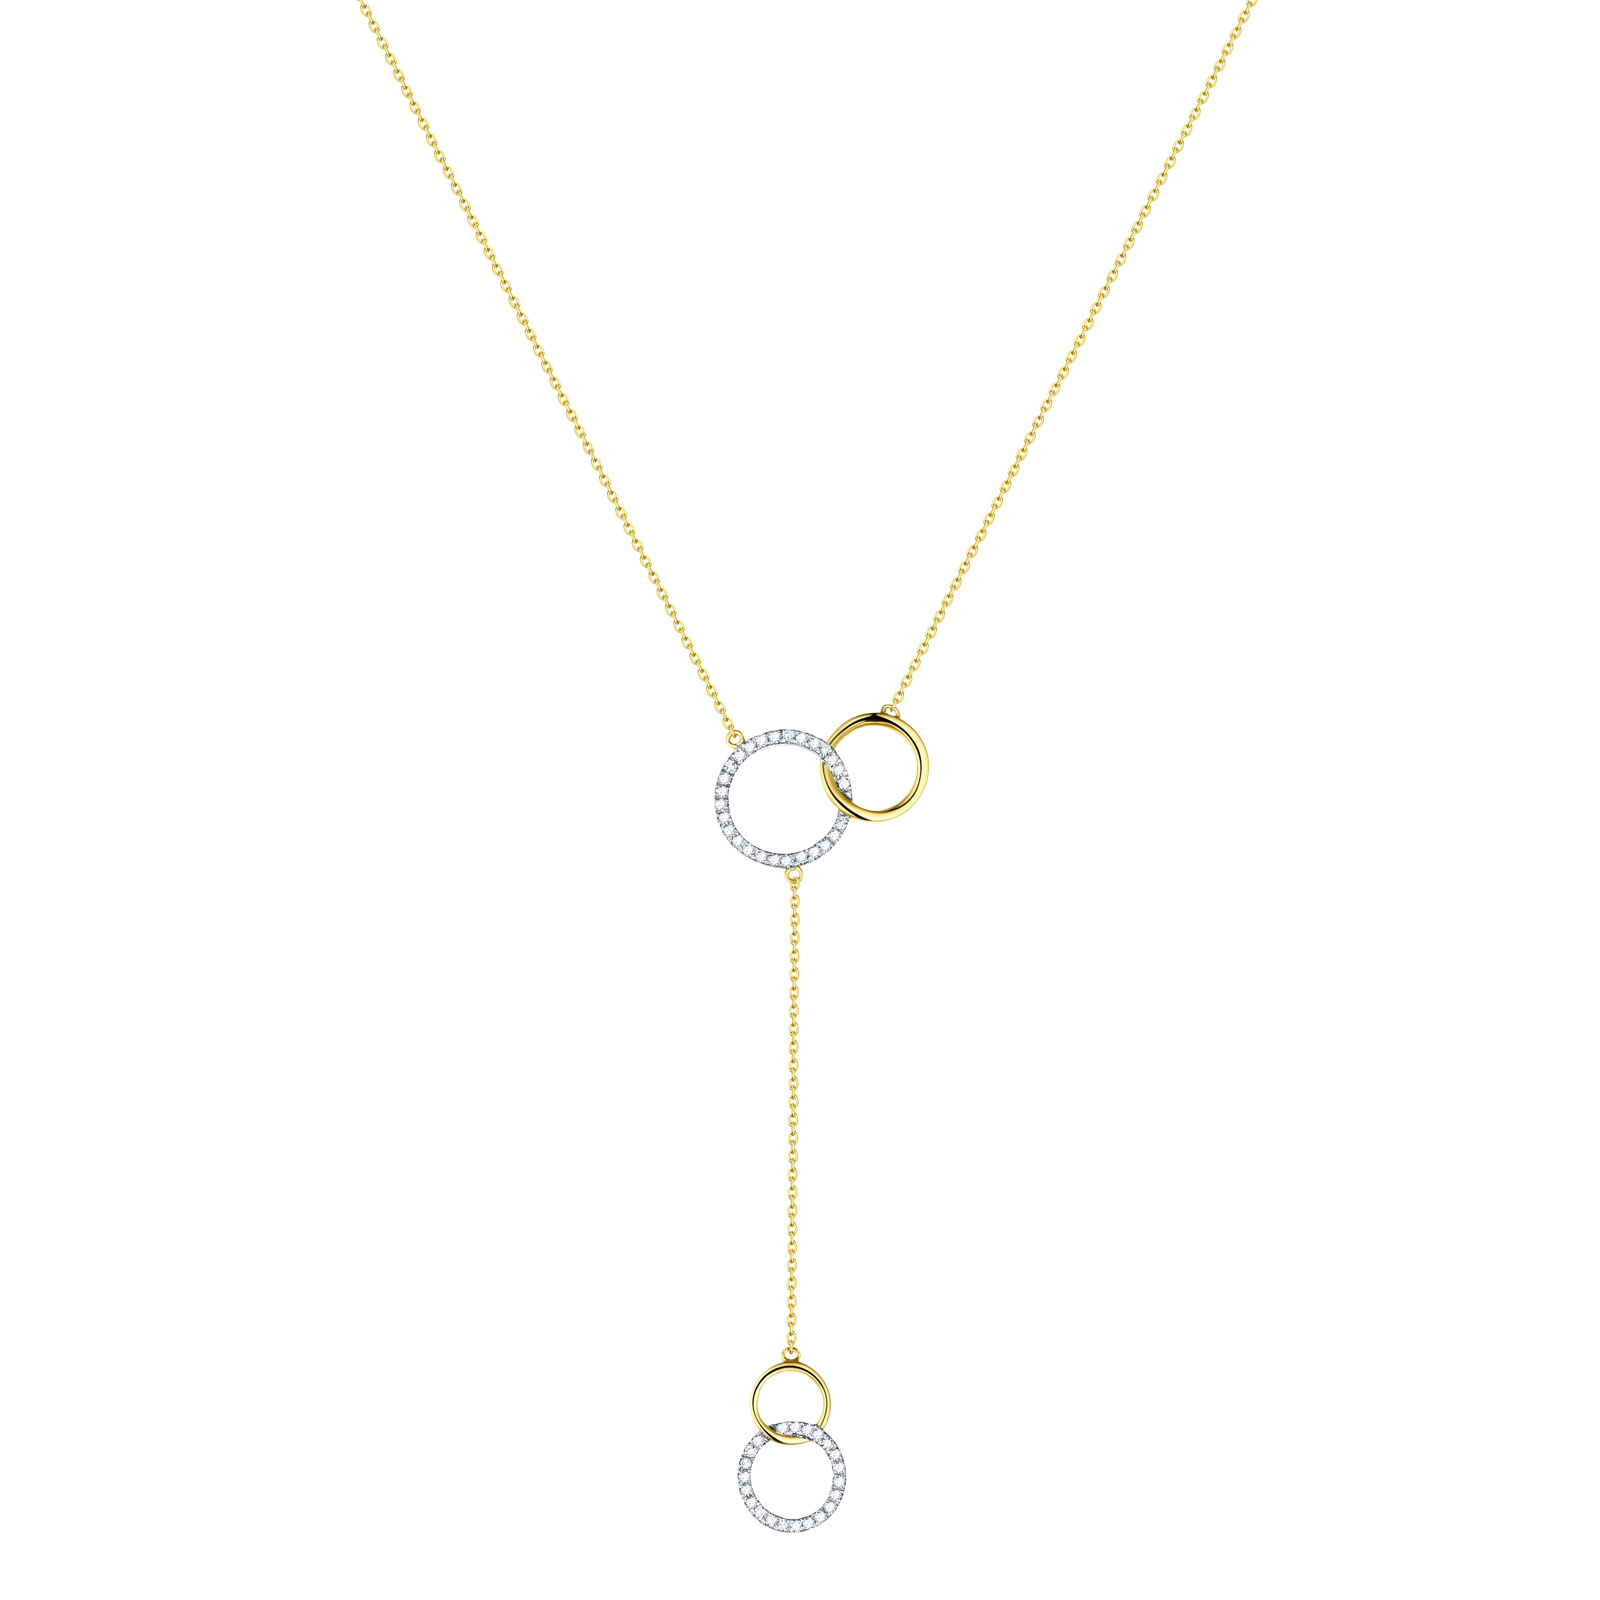 NL25994WHT- 14K Yellow Gold Diamond Necklace, 0.12 TCW